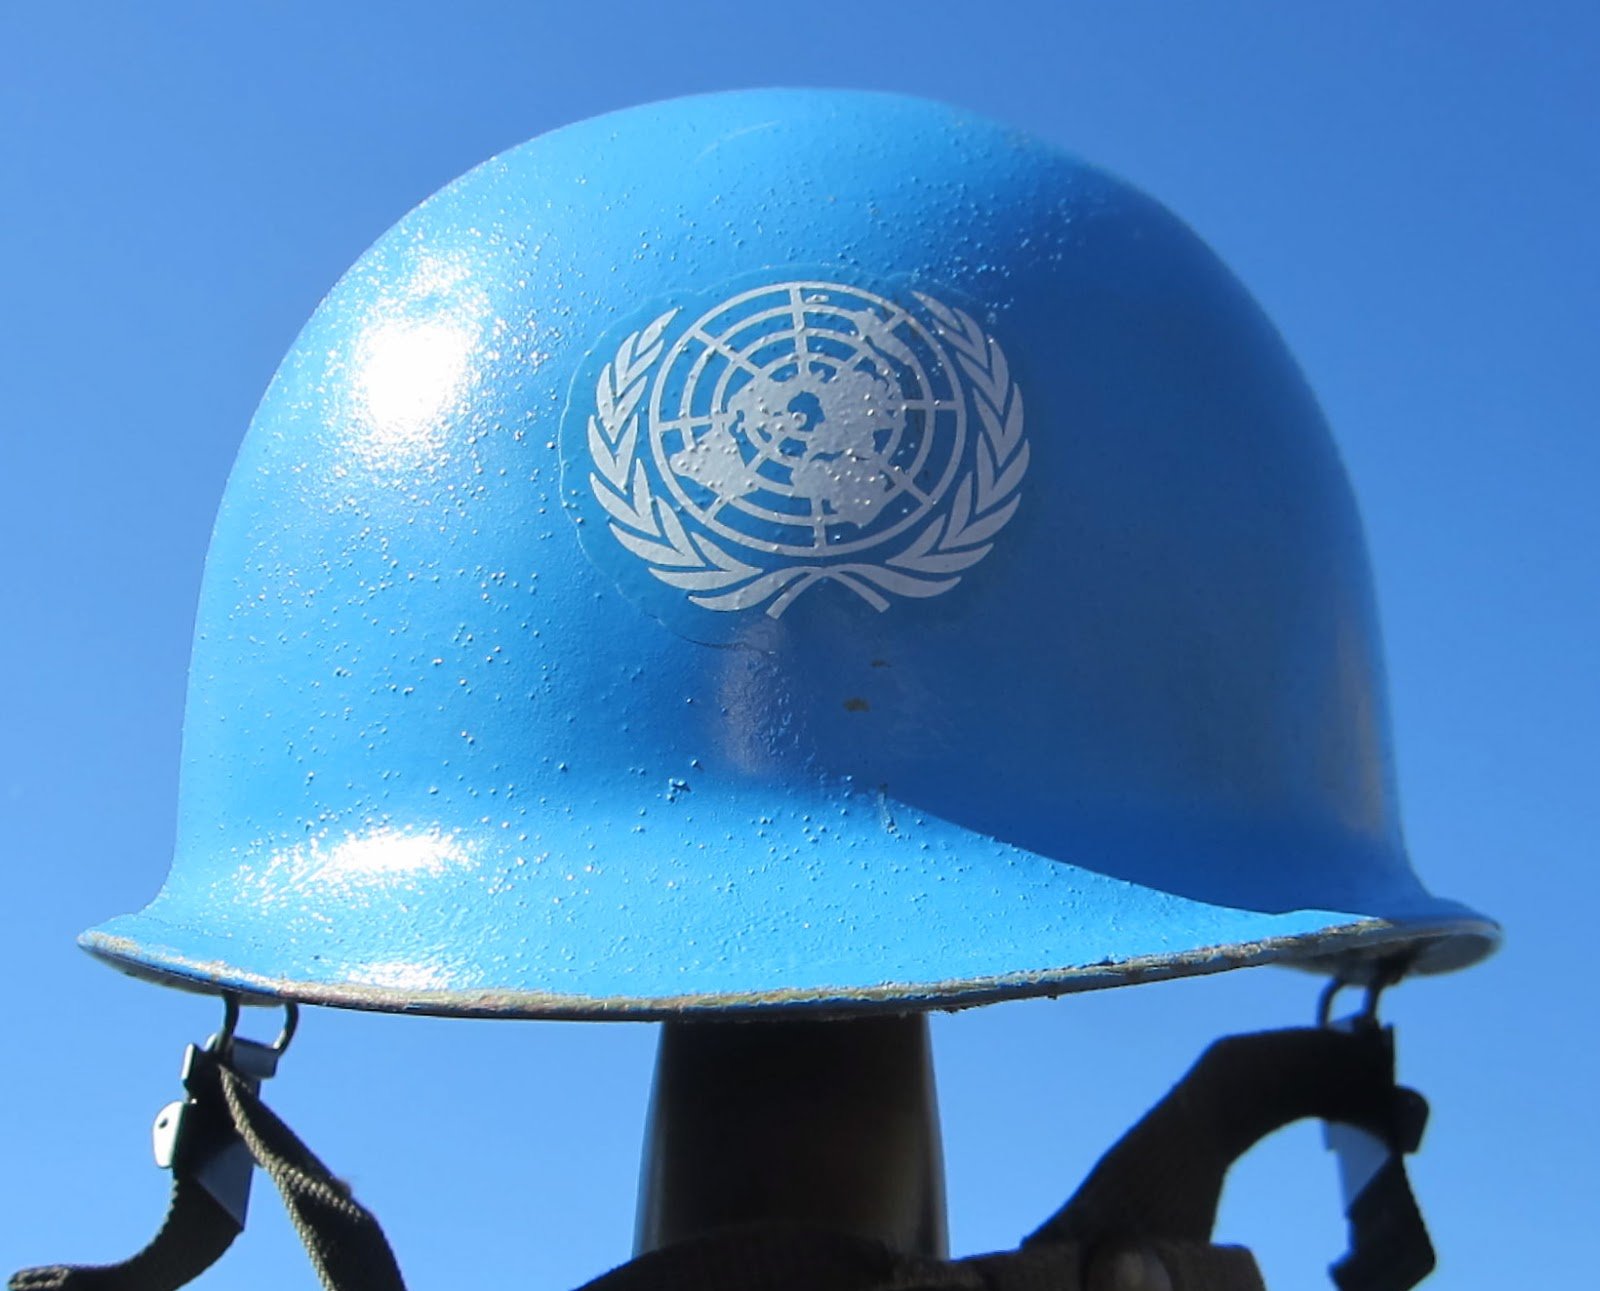 Армия оон. Миротворческие силы ООН. Миротворческая каска ООН. Шлем Миротворца ООН. Миротворческая миссия ООН - каска.